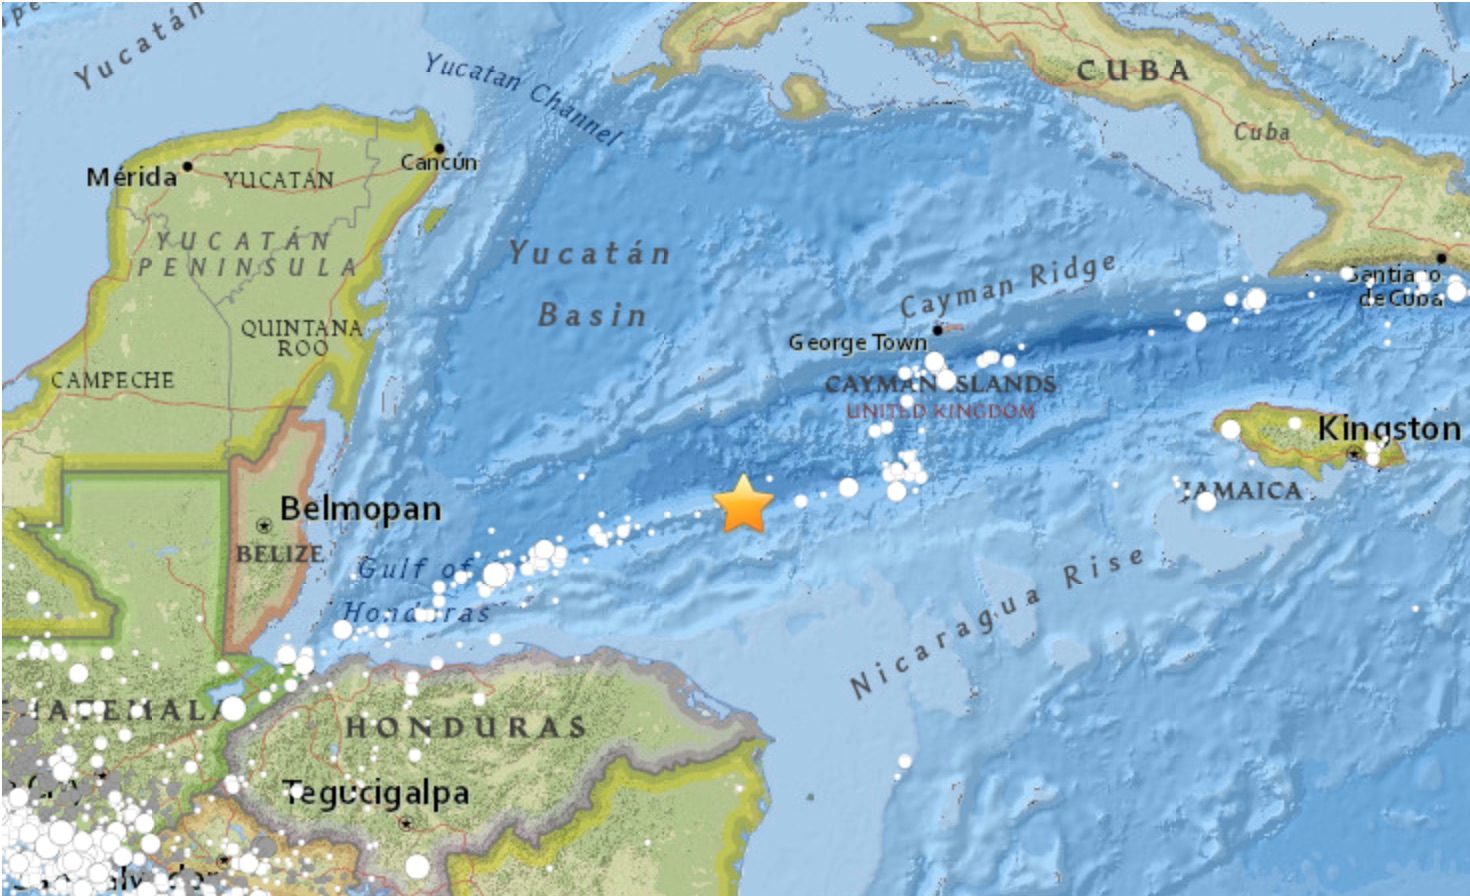 Magnitude 7.6 earthquake strikes off Honduras coast – USGS